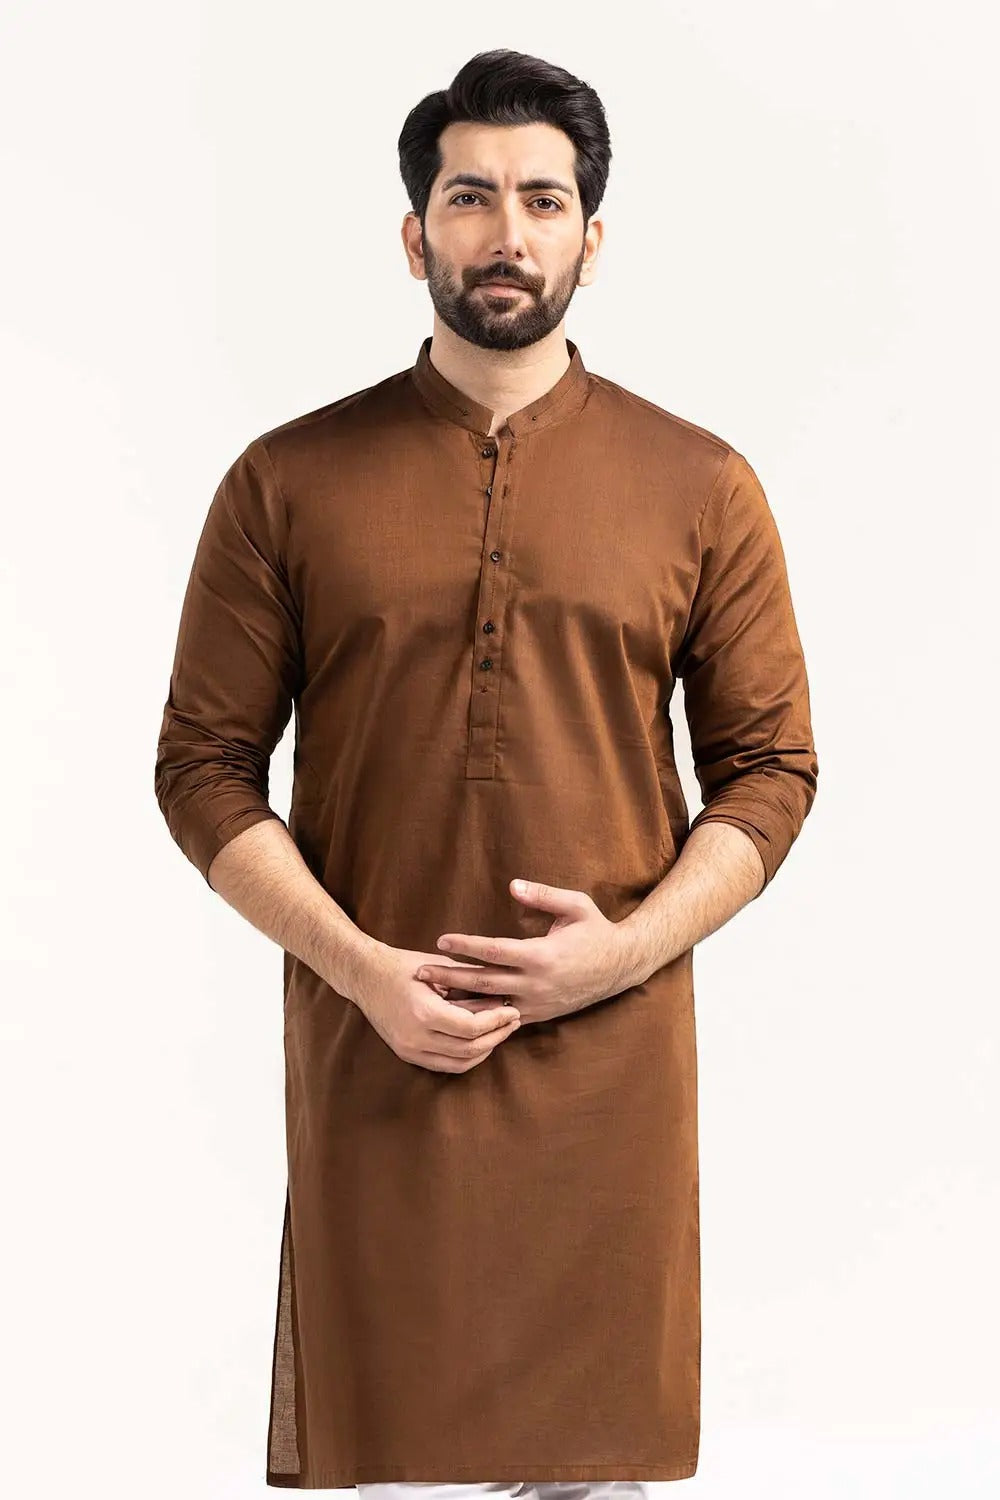 Gul Ahmed Ready to Wear Rust Fashion Kurta - KS-896